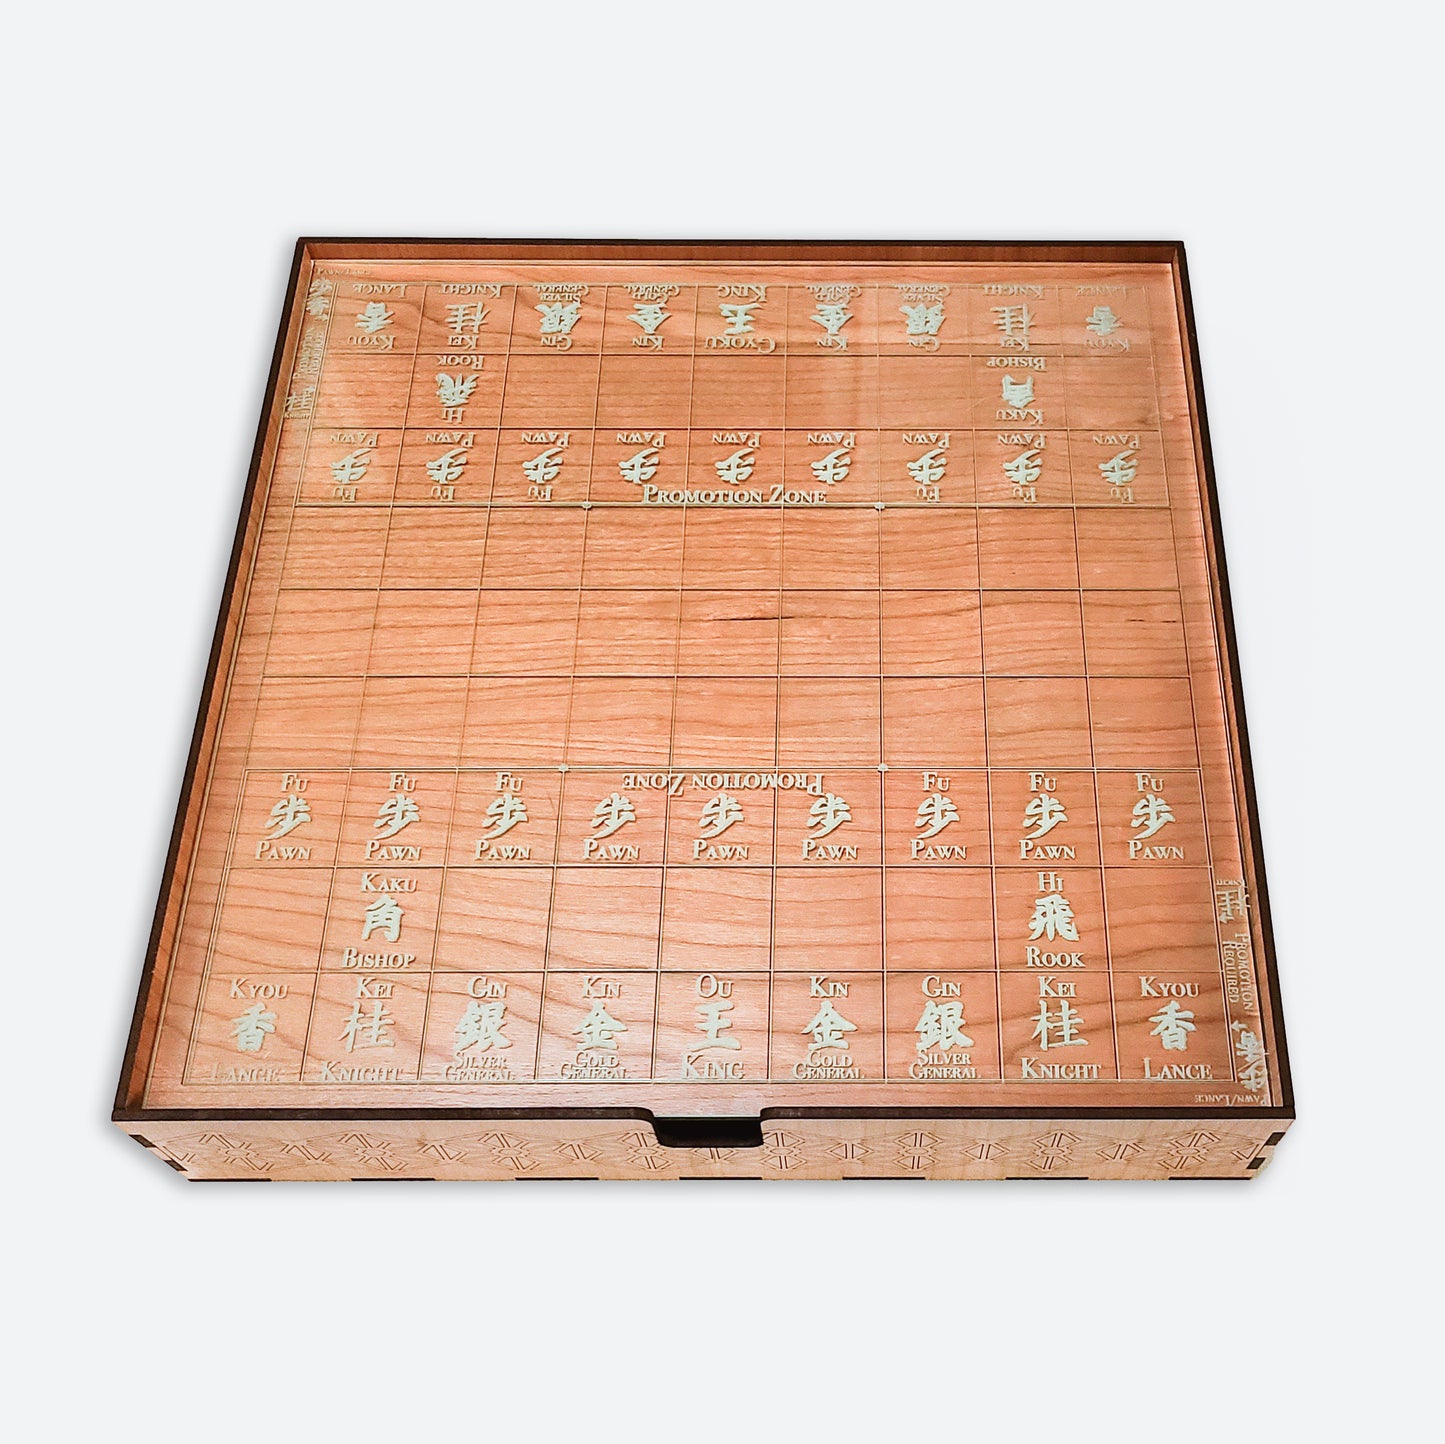 Shogi Board Game Japanese Traditional Game Made in Japan Shogi is Japanese  chess